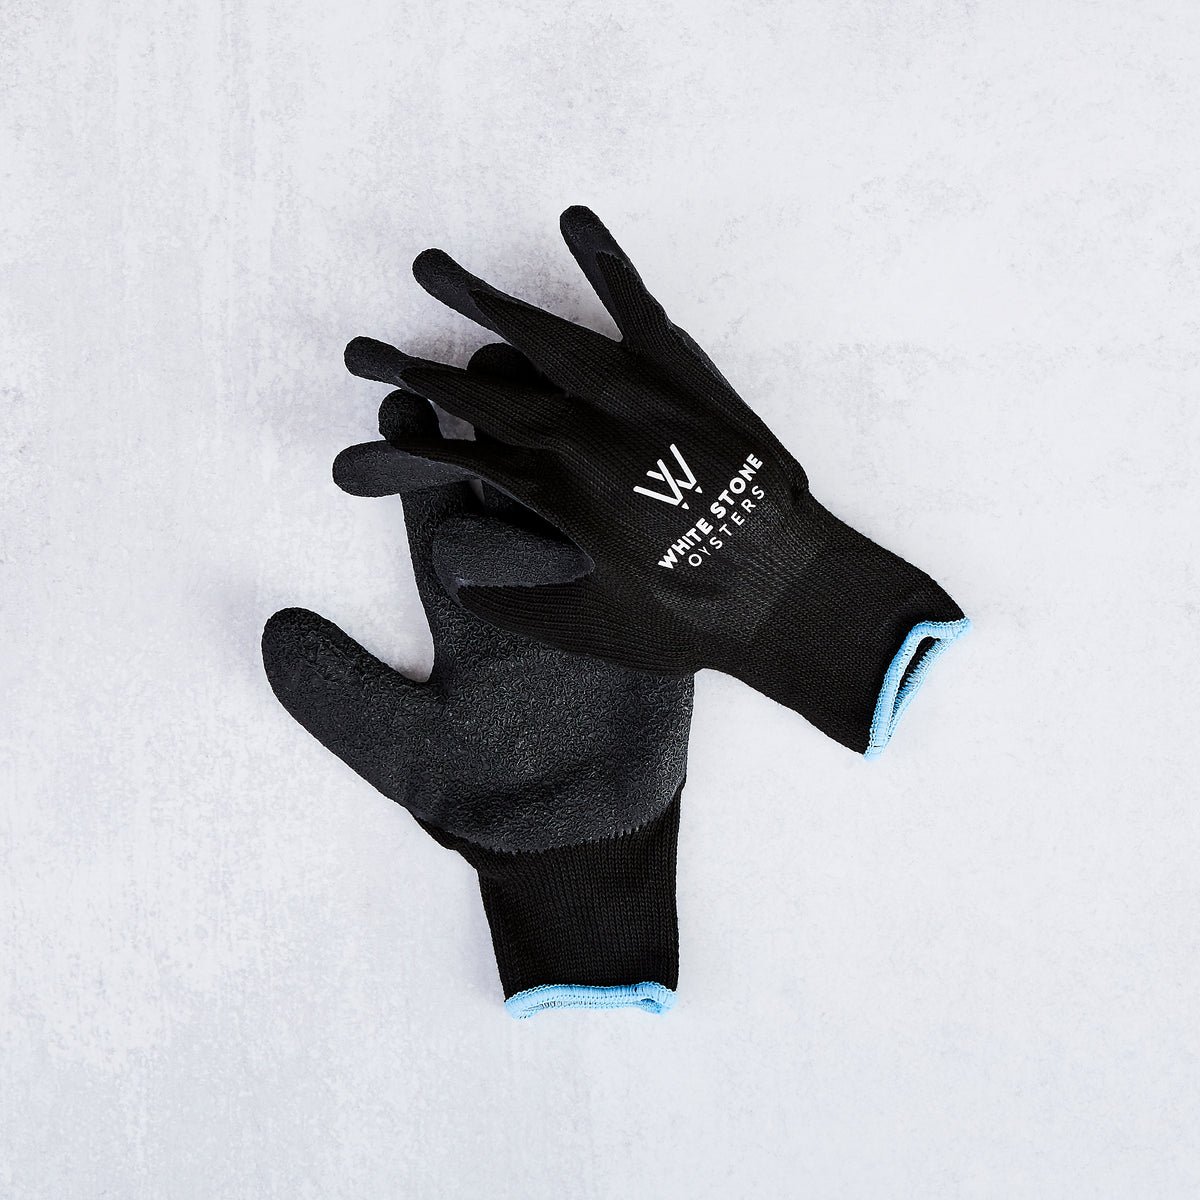 Cut Resistant Gloves - Charleston Shucker Co.